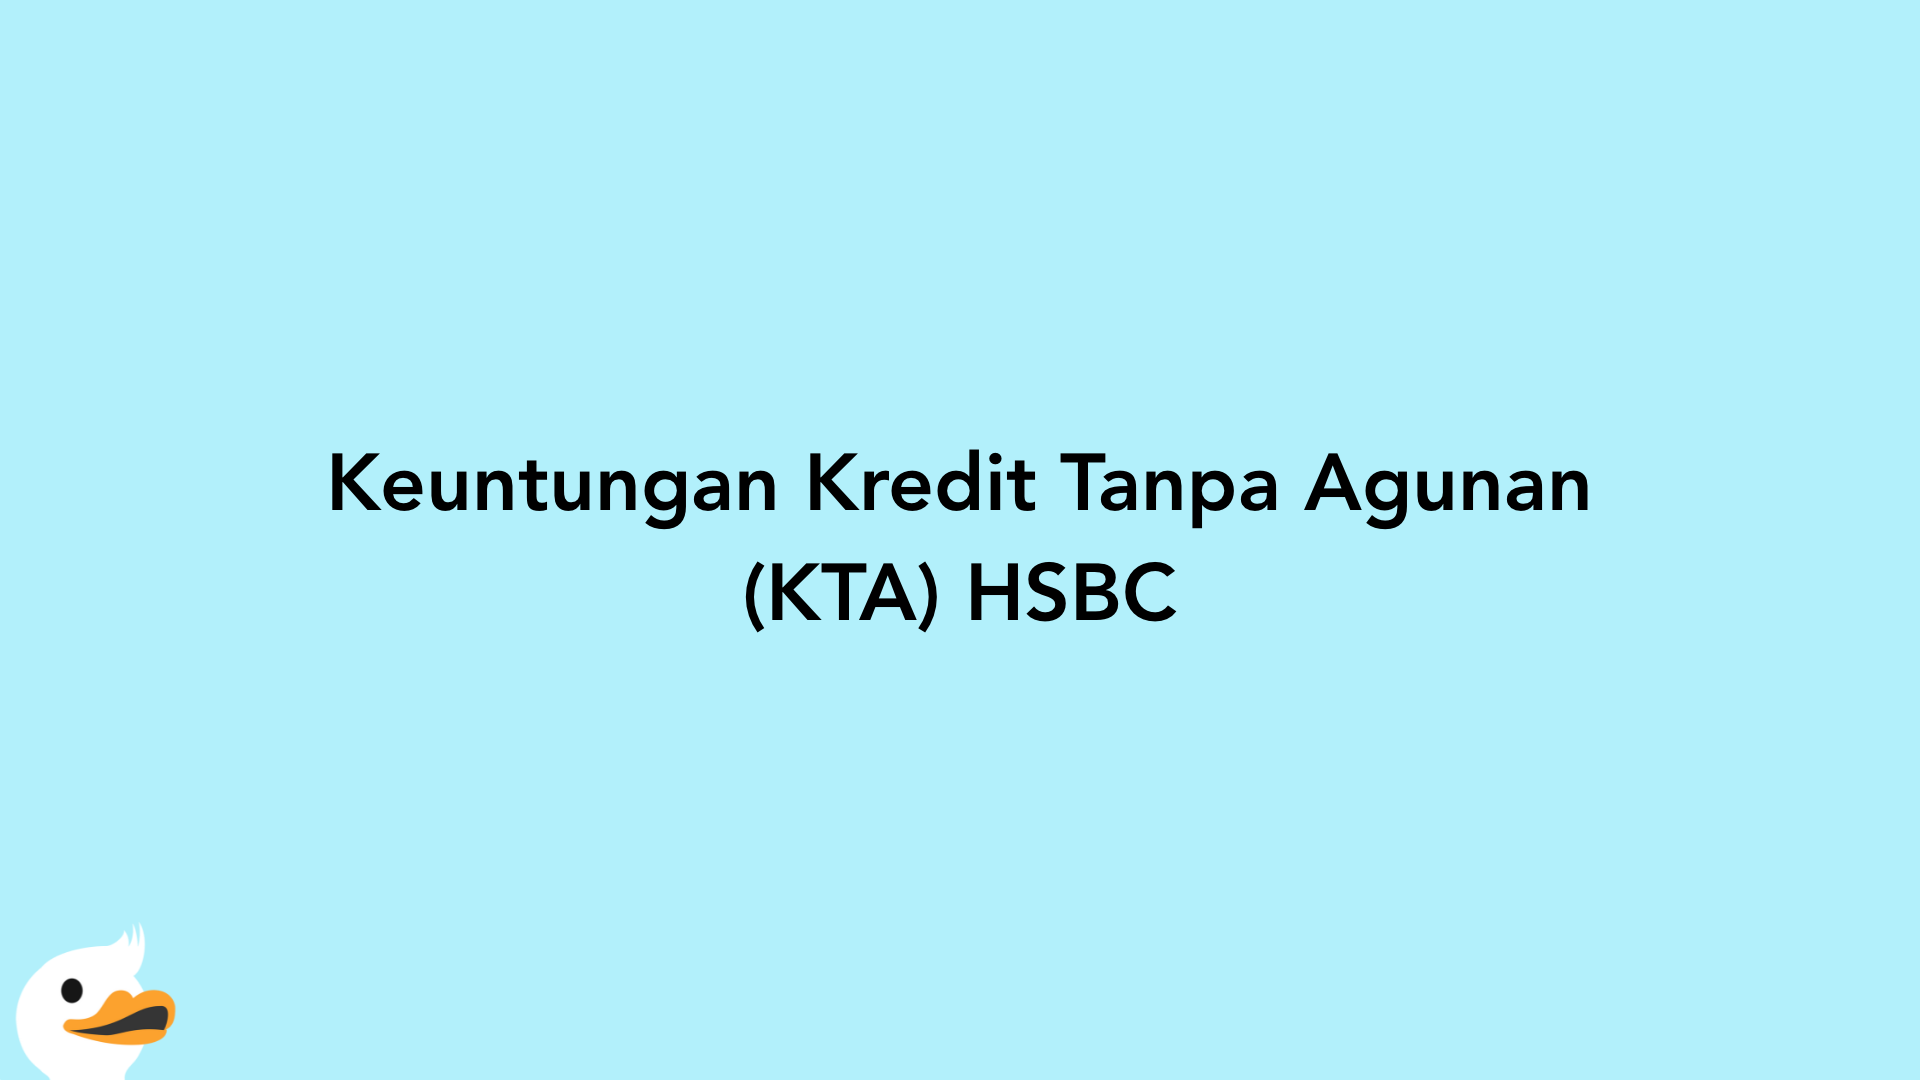 Keuntungan Kredit Tanpa Agunan (KTA) HSBC